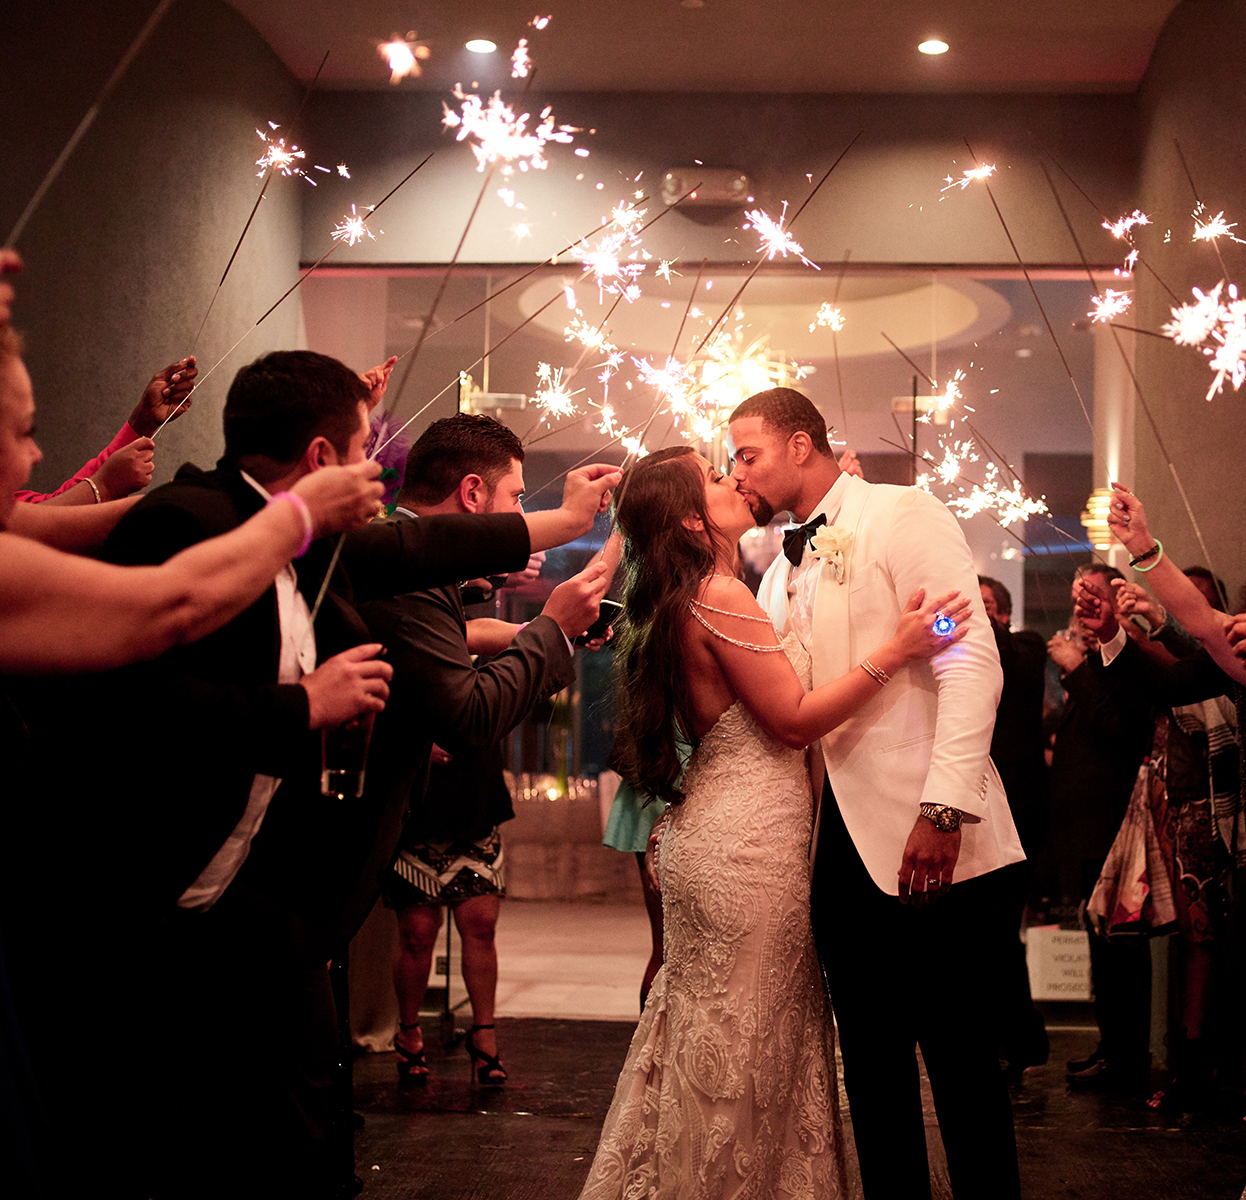 sparklers - sendoff - wedding exit